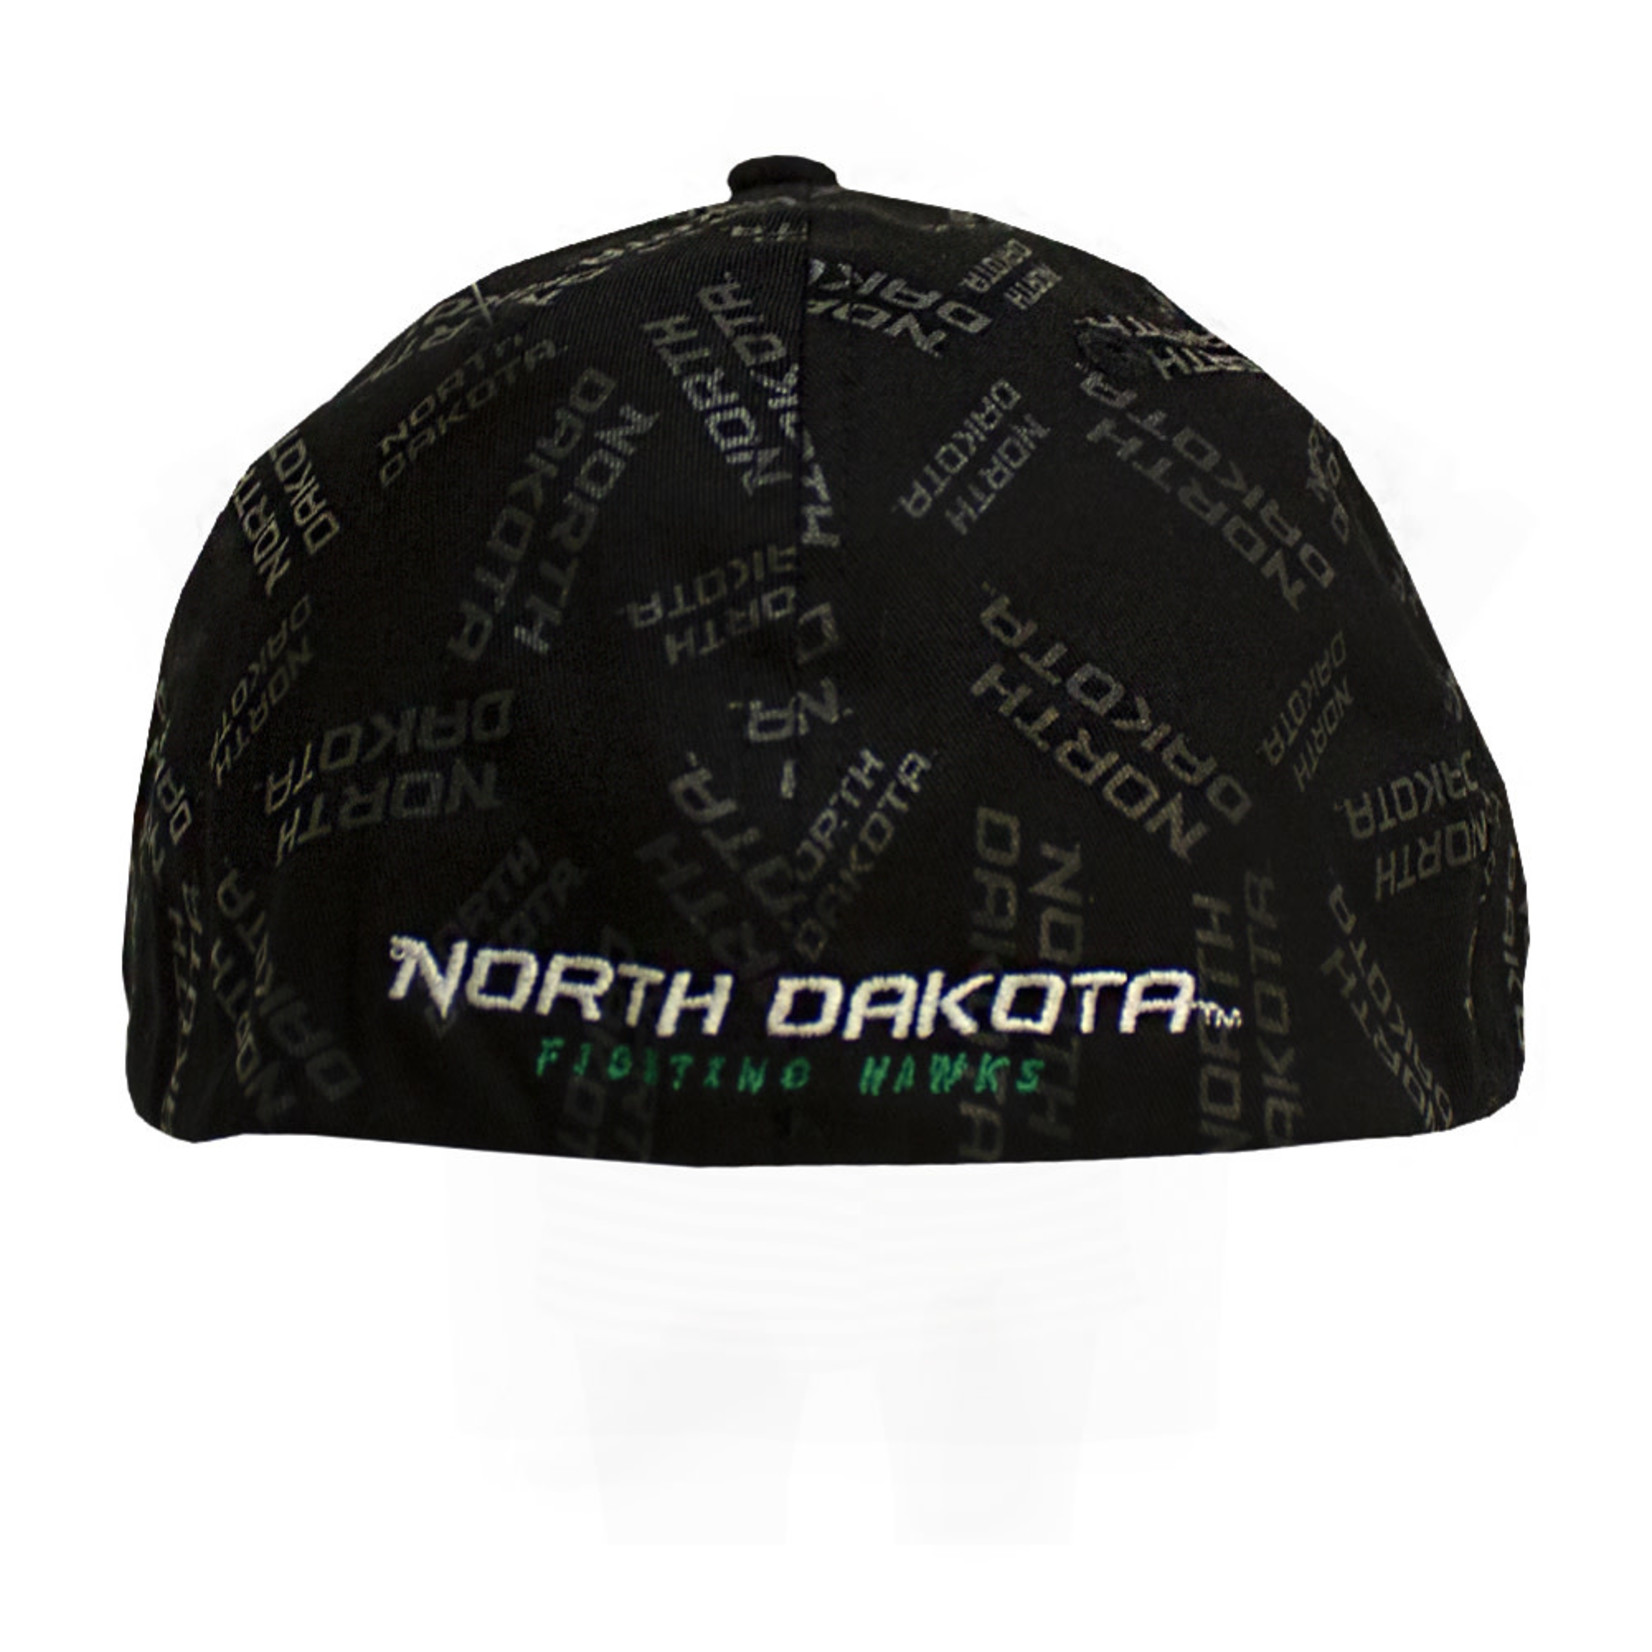 North Dakota All Over Hat